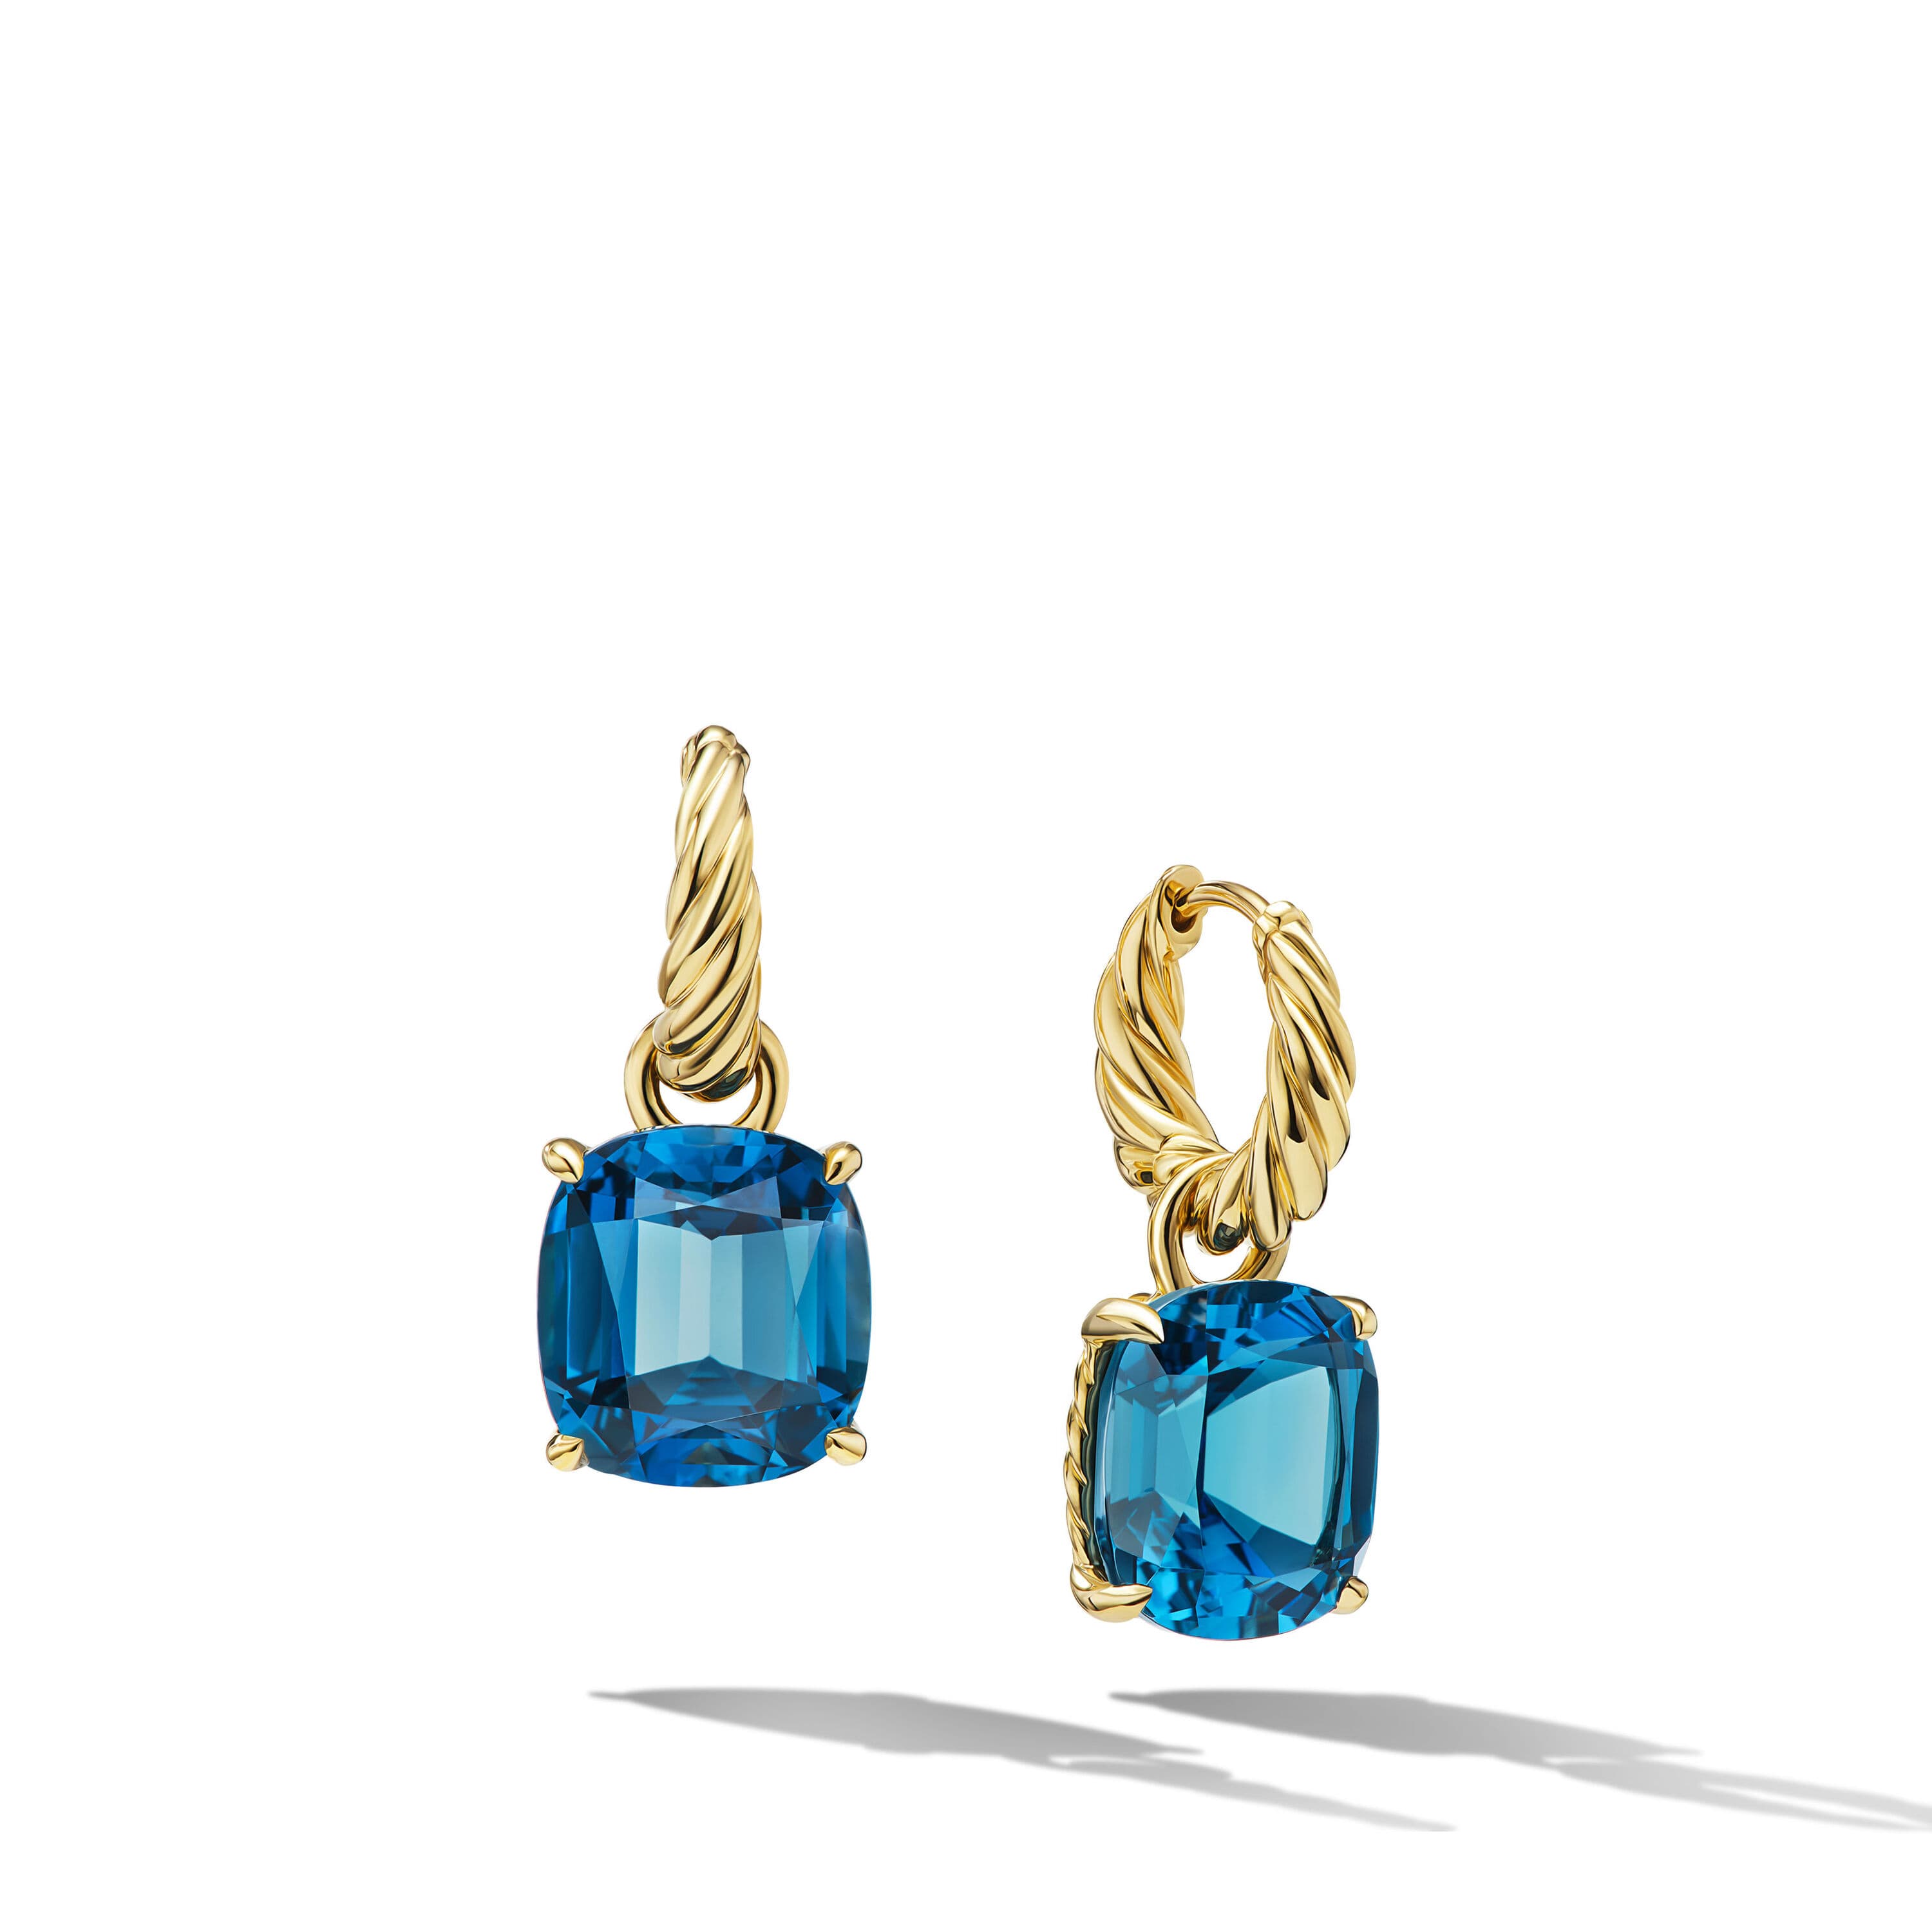 David Yurman Marbella Drop Earrings in Gold with Hampton Blue Topaz